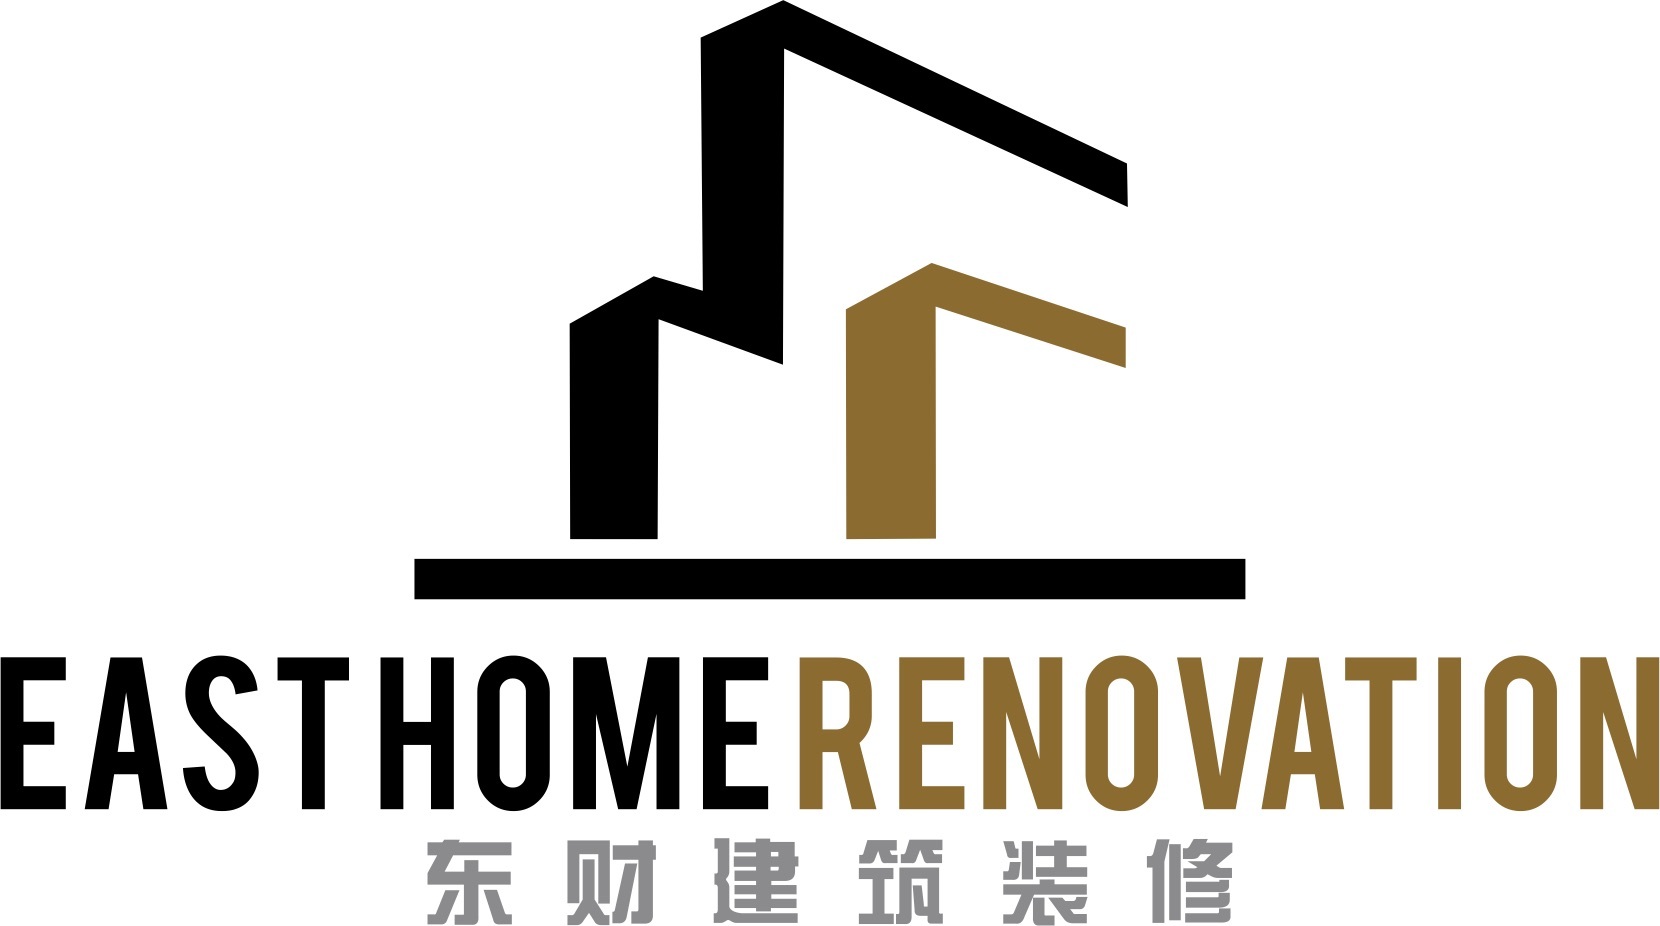 East Home Renovation Inc's logo